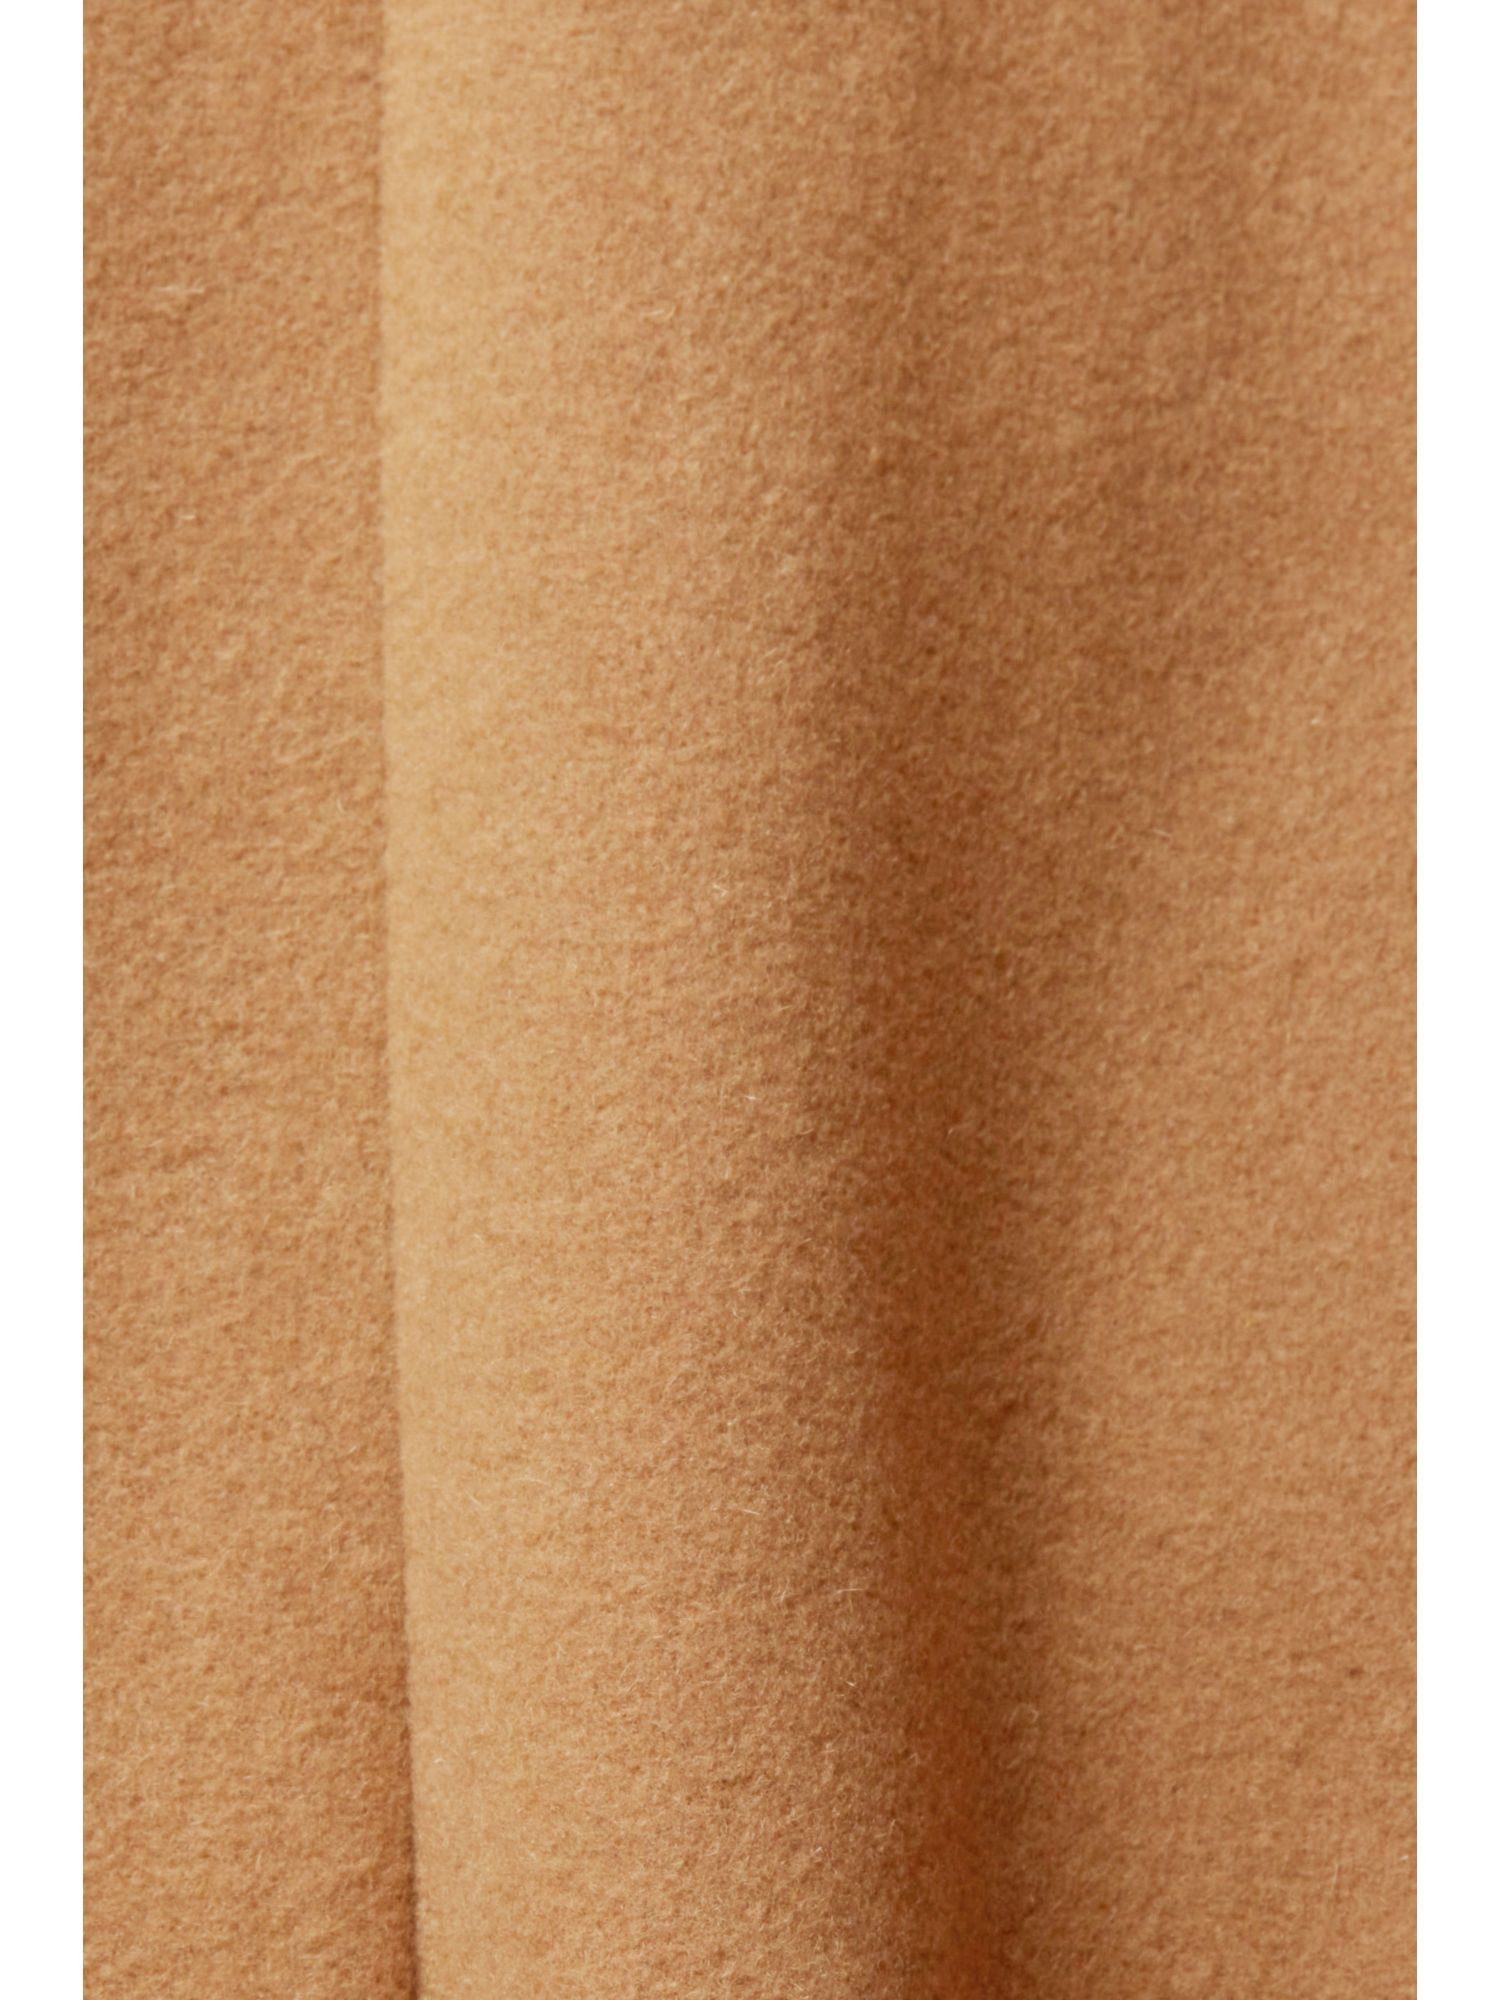 Esprit Collection Wollmantel aus CAMEL Mantel Kapuze Wollmix mit abnehmbarer